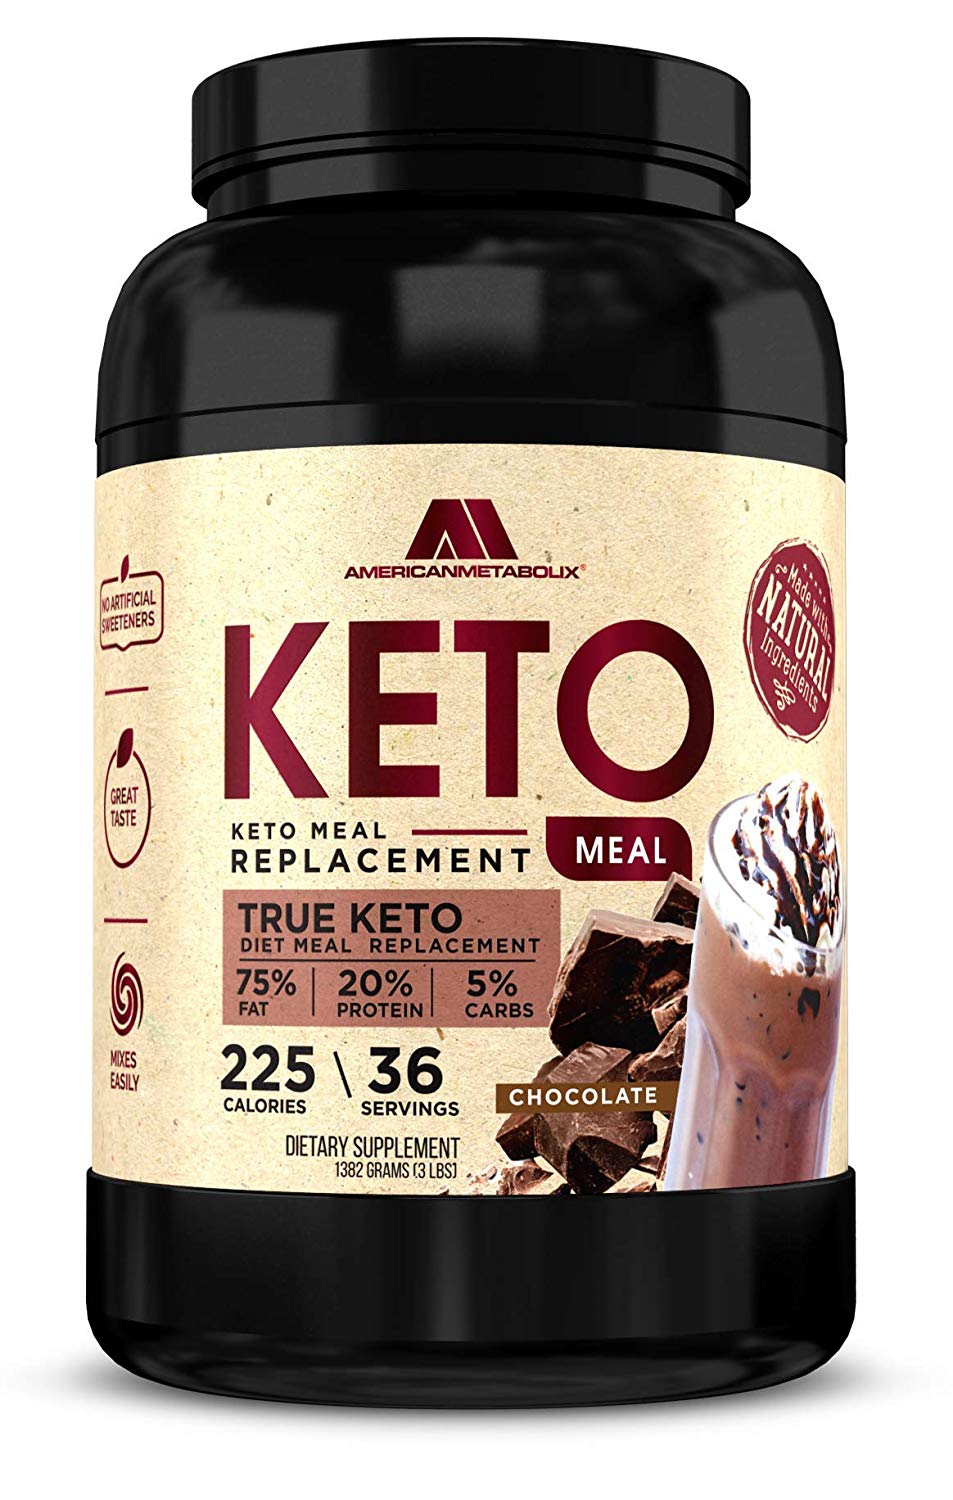 American Metabolix Keto Meal Chocolate Malt, 48 Ounce